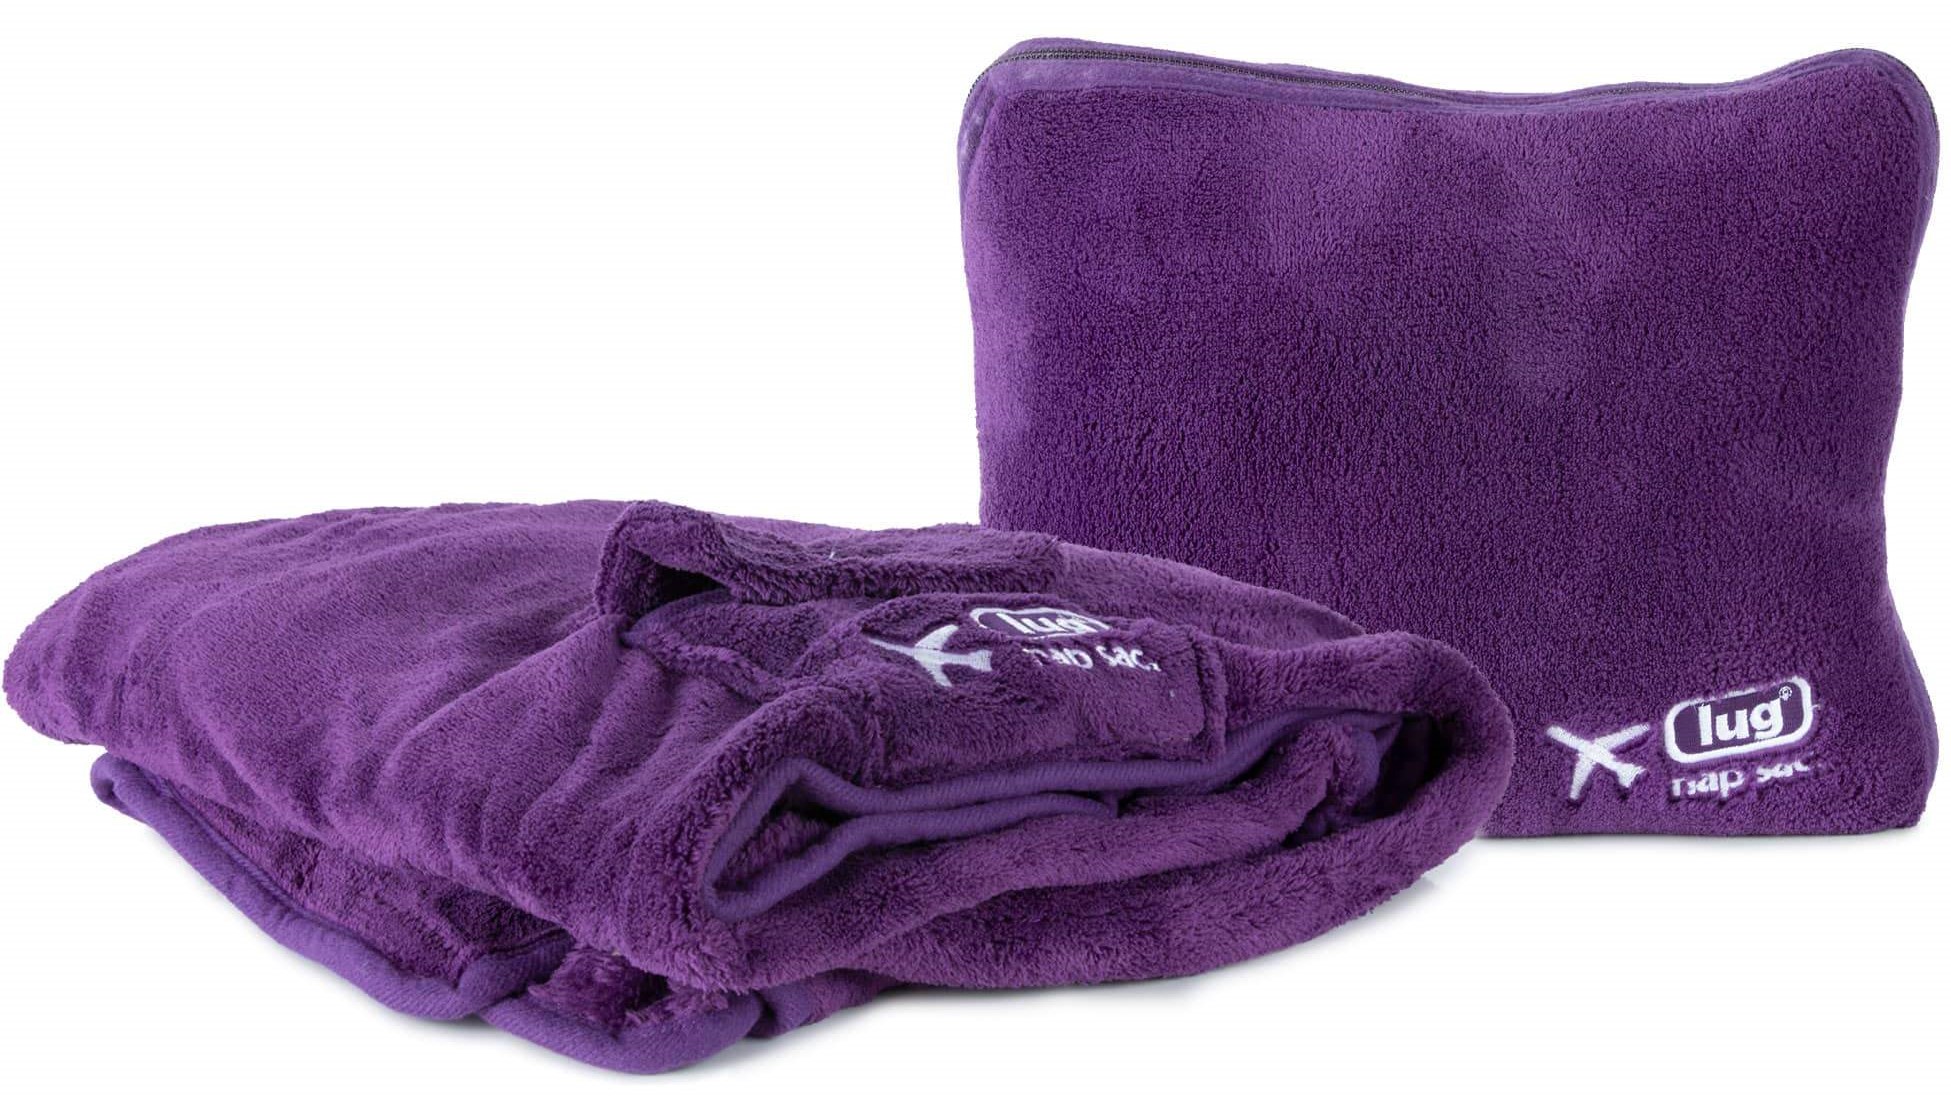 LUG Nap Sac Travel Pillow Blanket Plum Purple Planktown Hardware More